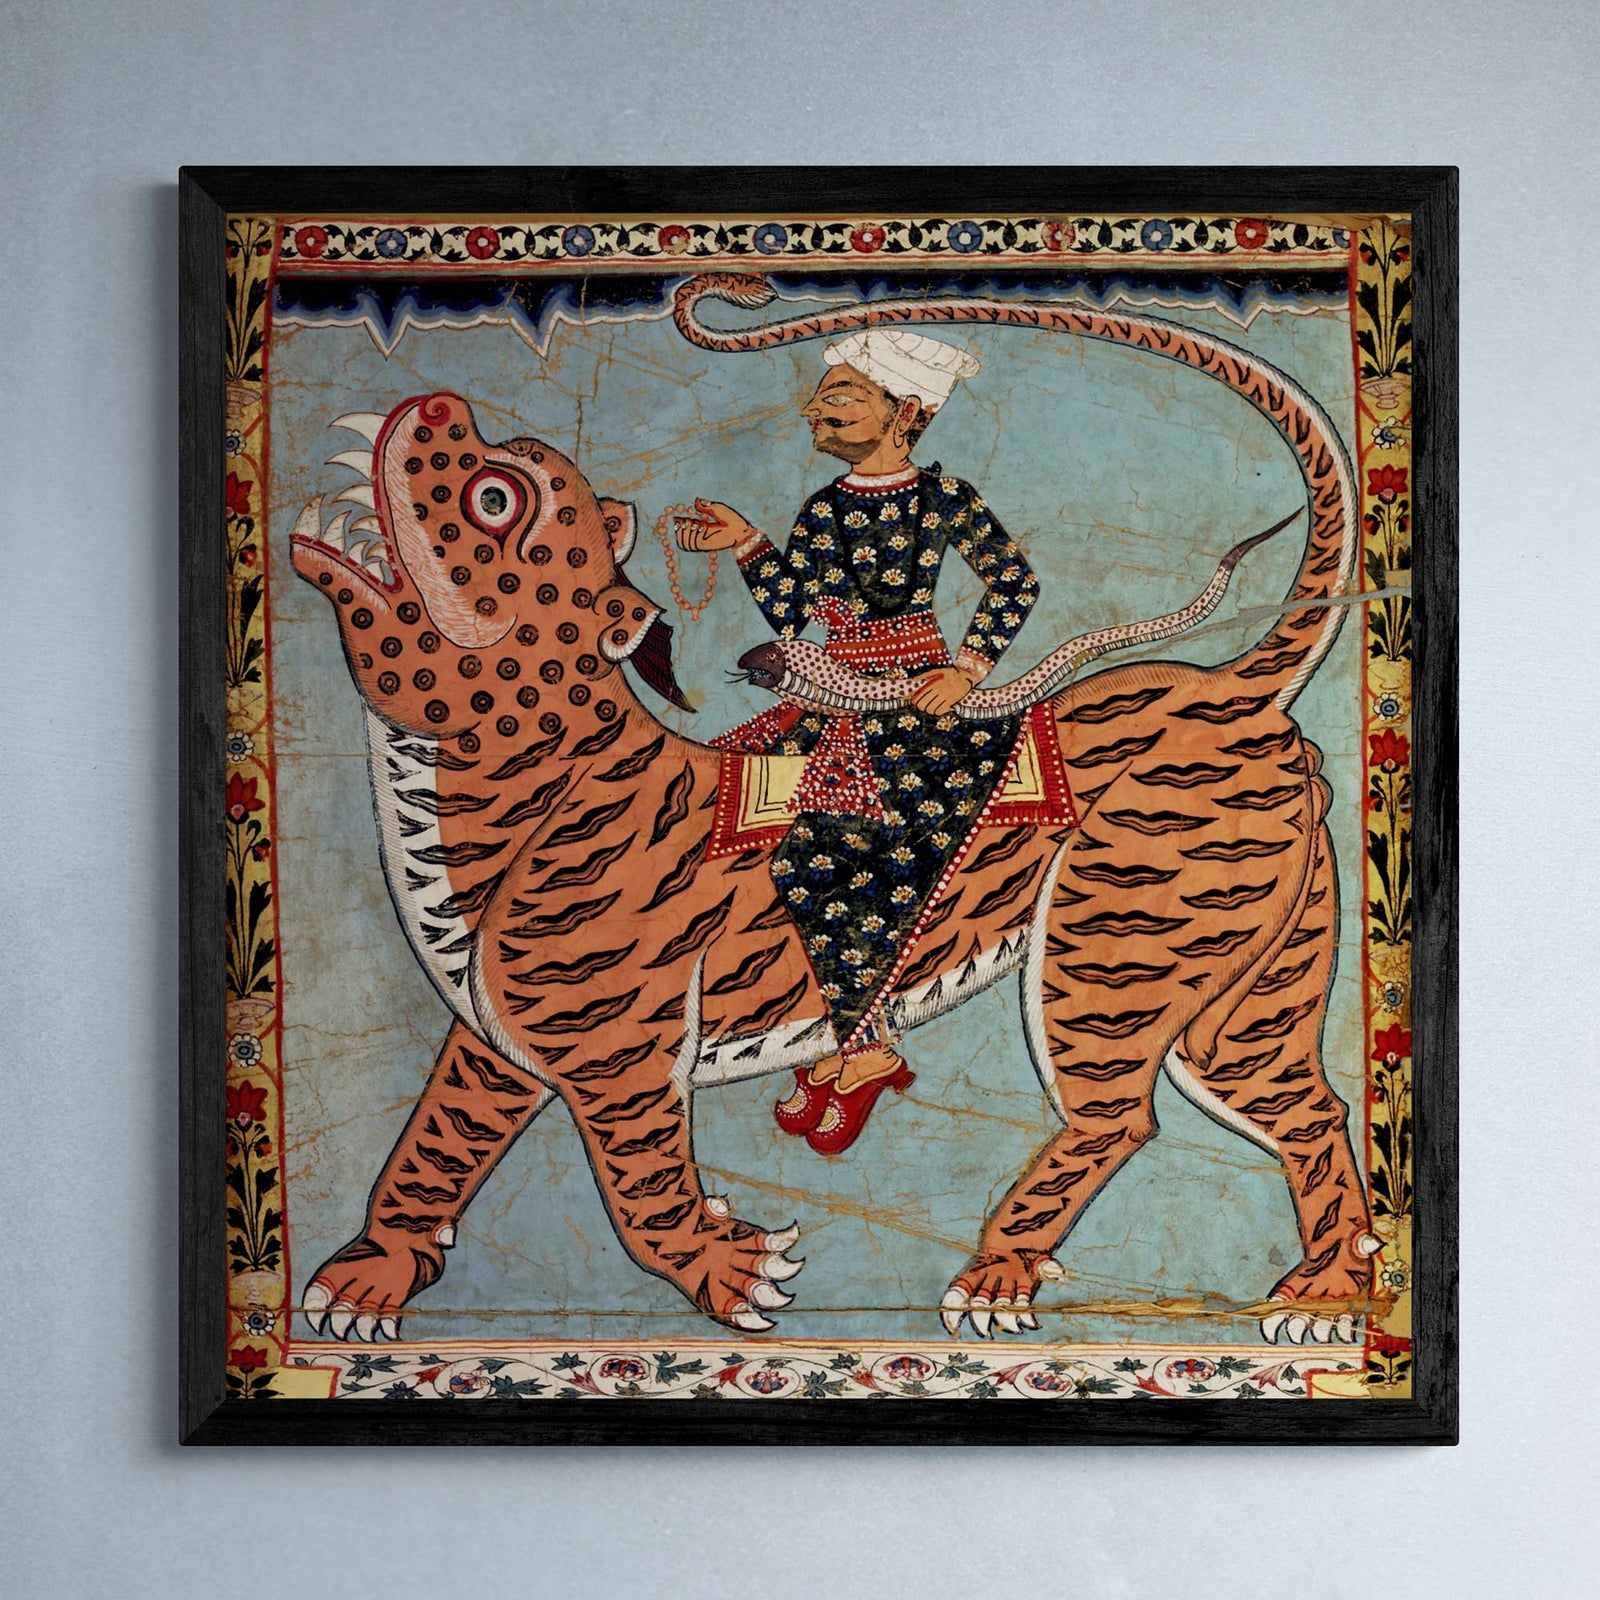 Fine art 12"x12" / Black Frame Pir Gazi and his Tiger, Indian Art, Islamic Art, Muslim Art, Antique Sufi Rumi Mystic Cat Feline Framed Art Print